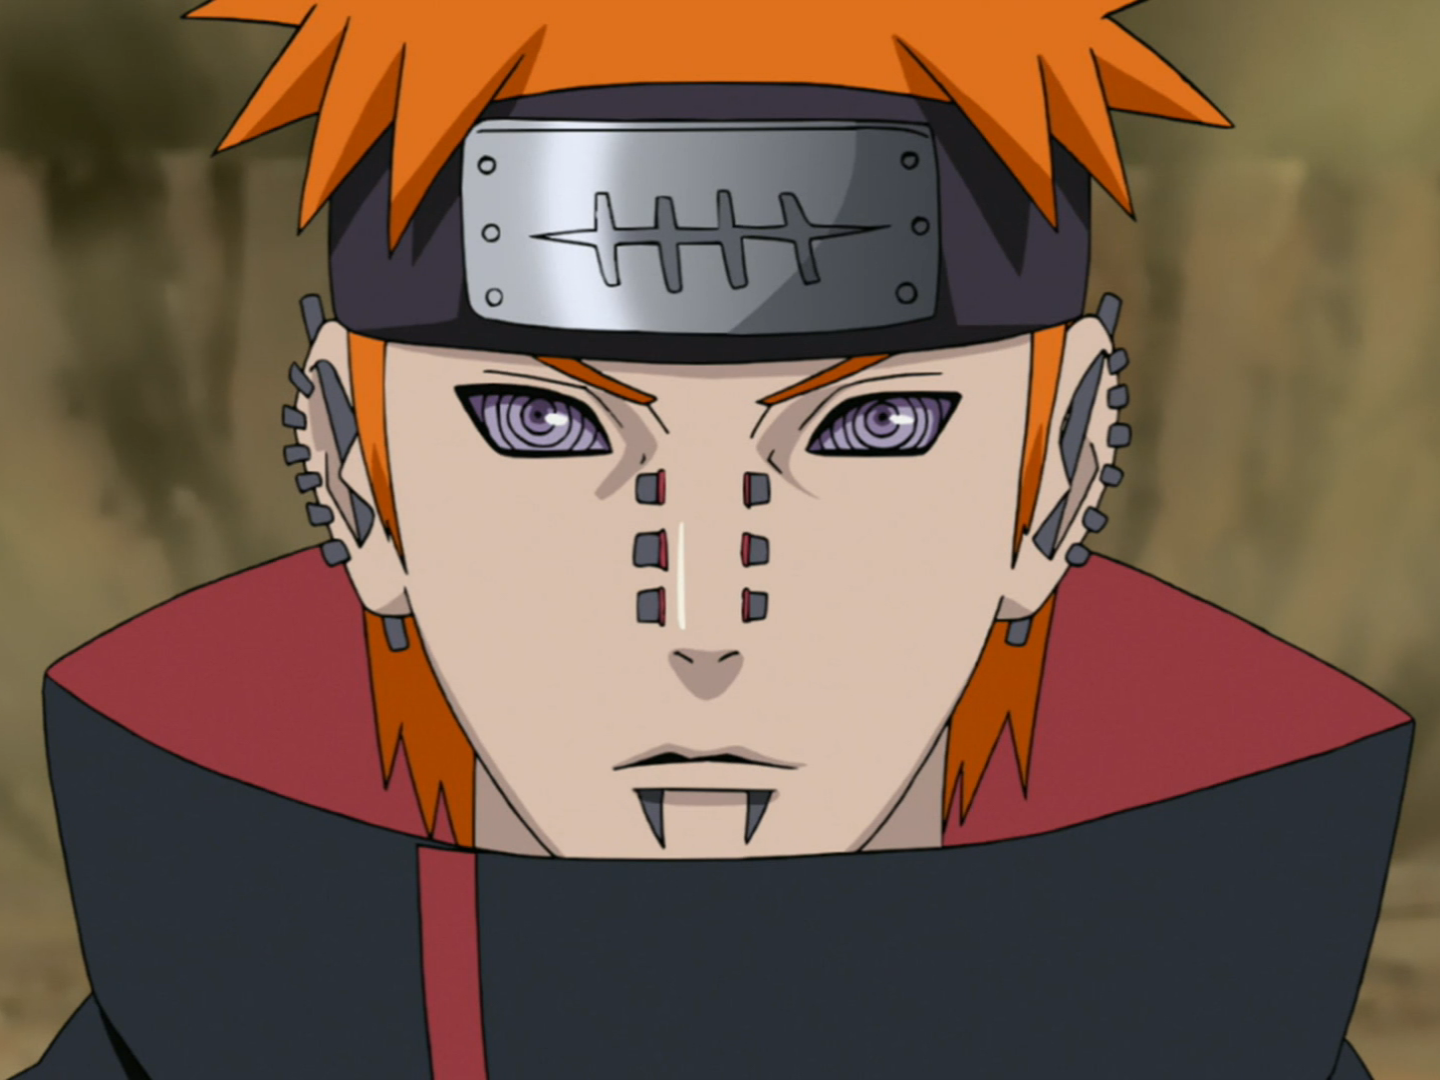 Every Akatuski member in Naruto, ranked based on likeability